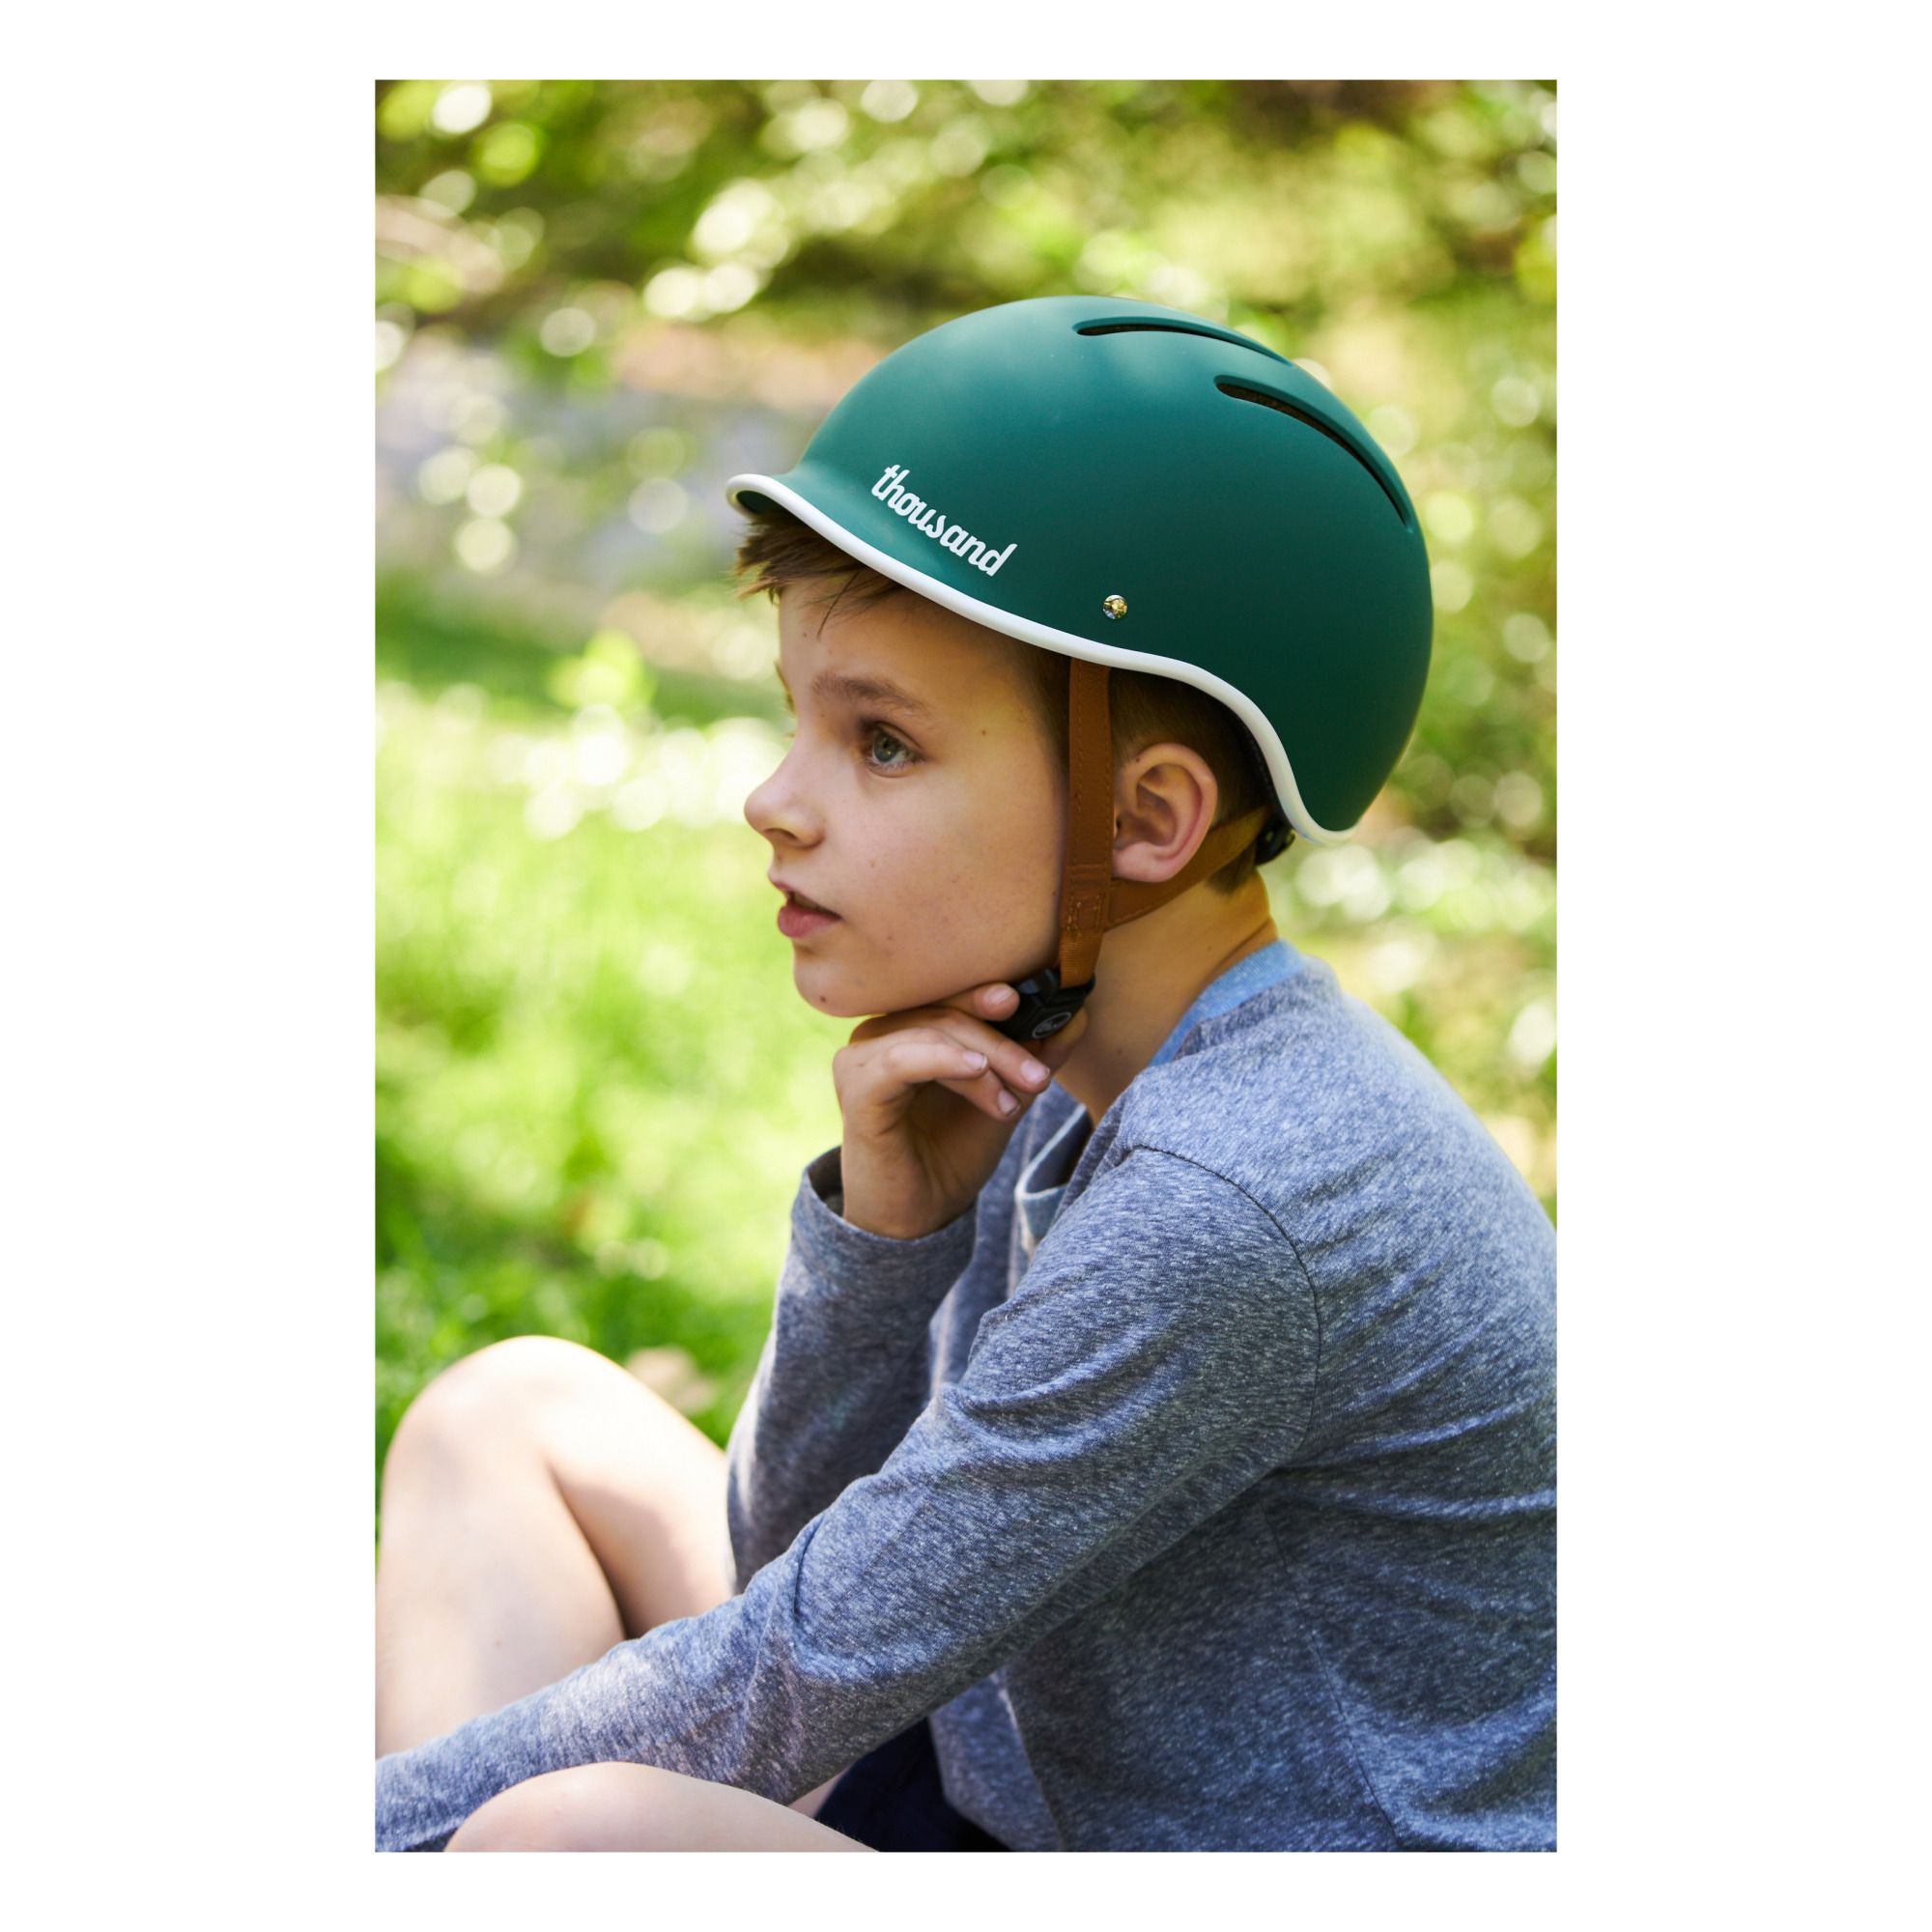 Childs Childrens Boys Girls Bike Bicycle Cycle Helmet Green Small 47-52cms SH 